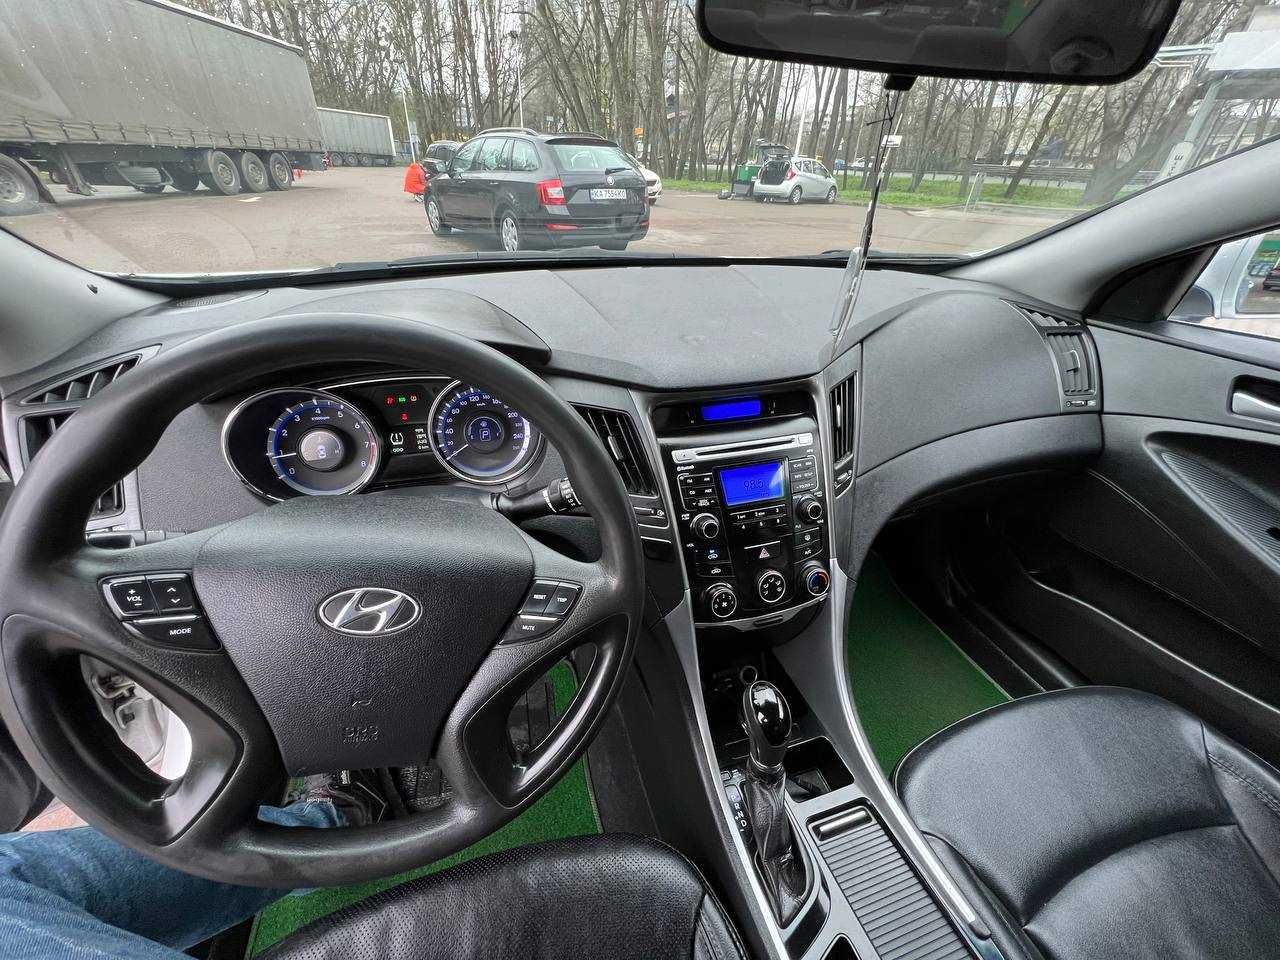 Аренда авто ДОЛГОСРОЧНО Hyundai Sonata 3800грн 2013-14г под ВЫКУП